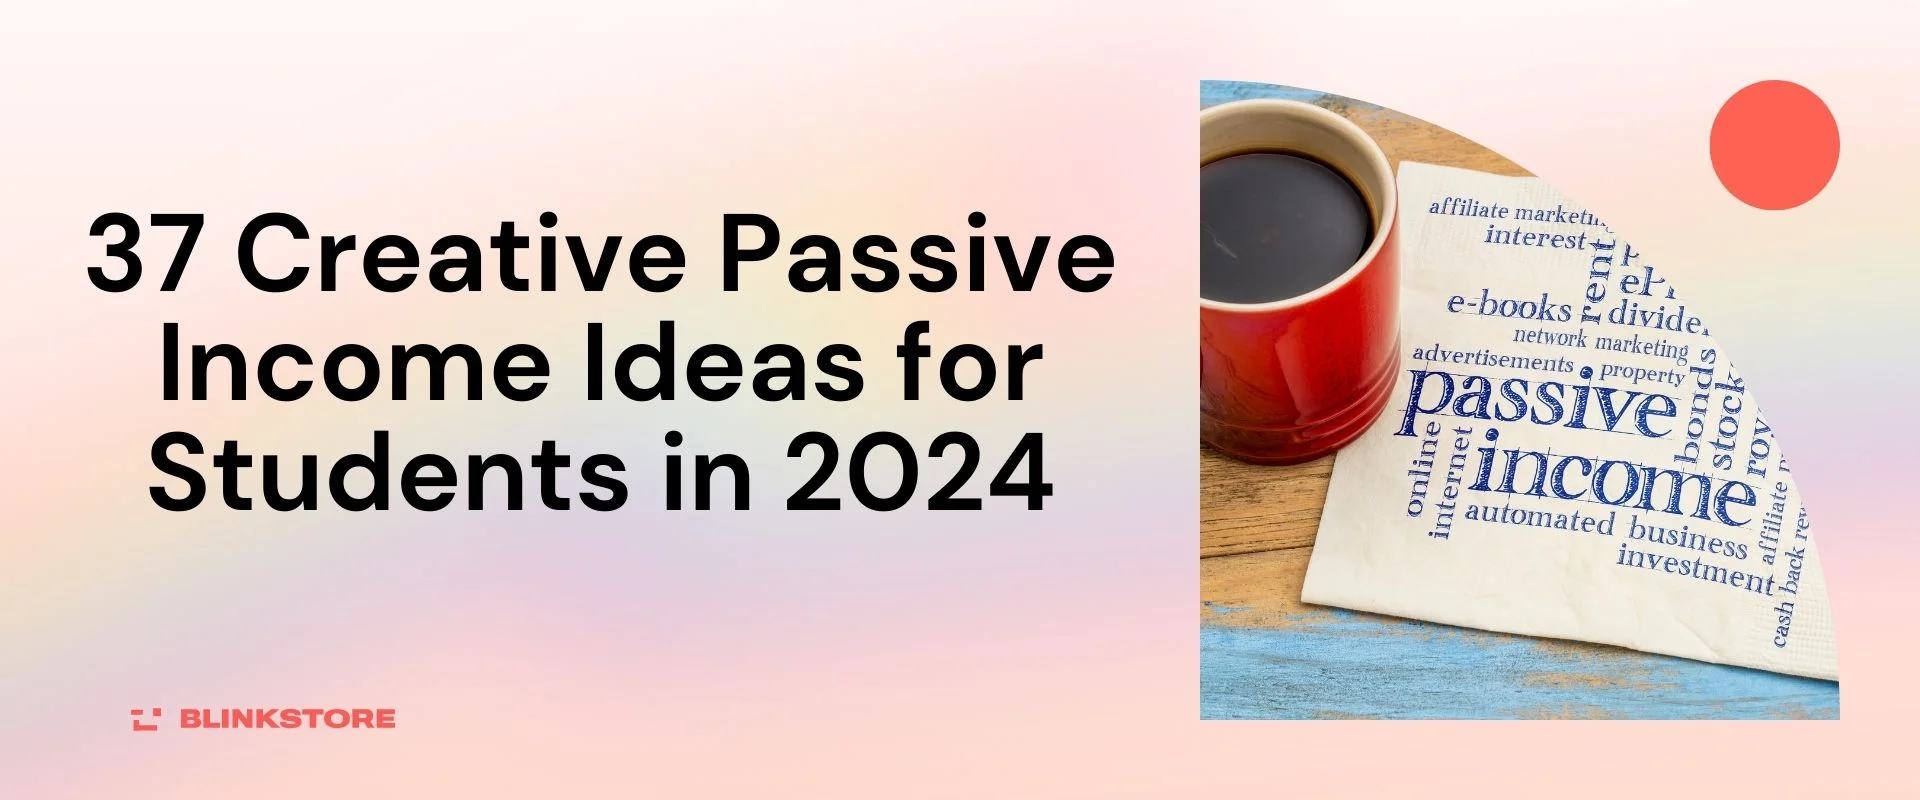 37 Creative Passive Income Ideas for Students in 2024